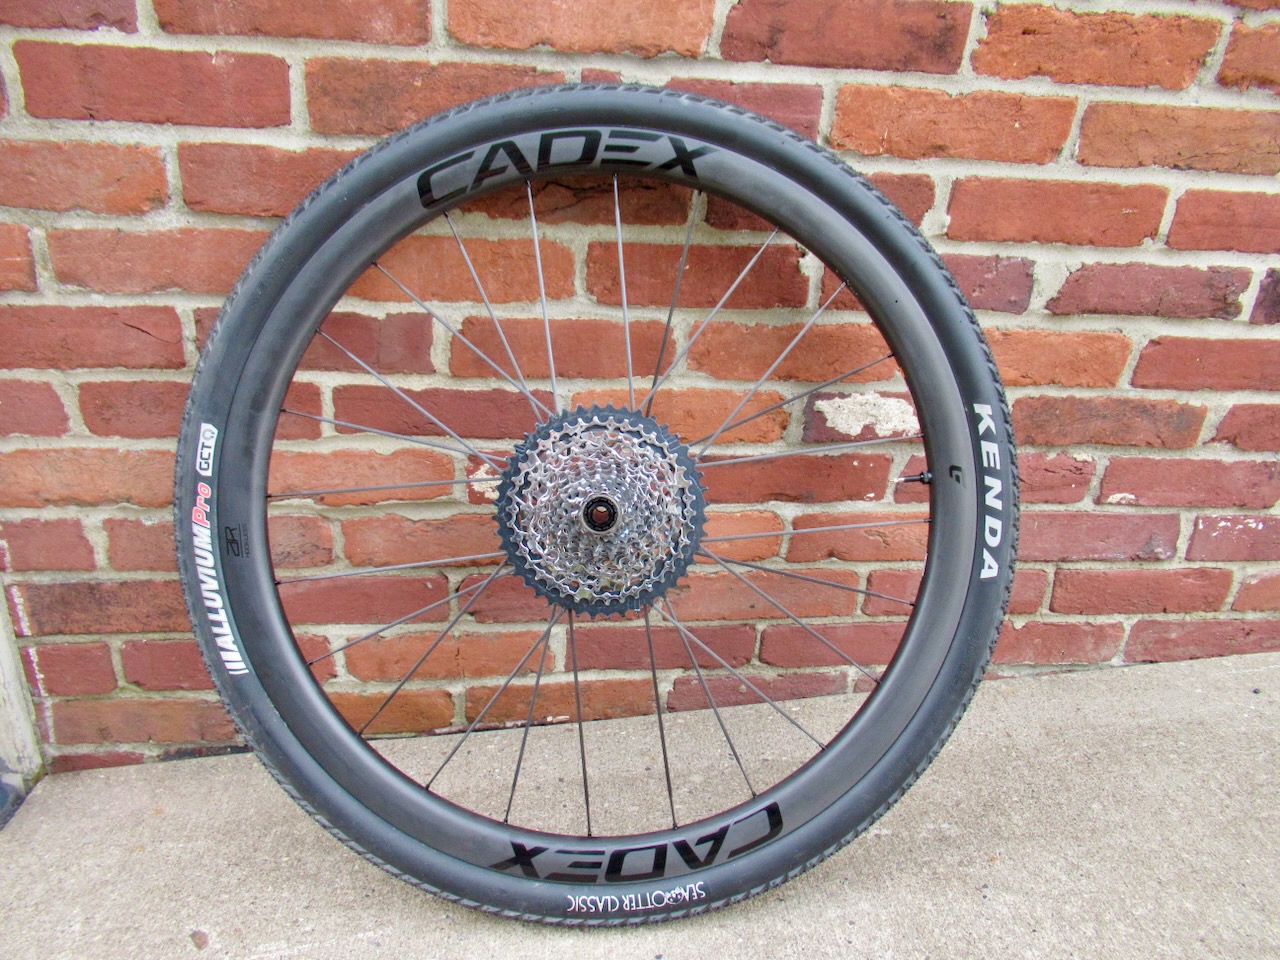 CADEX AR 35 DISC with kenda tire